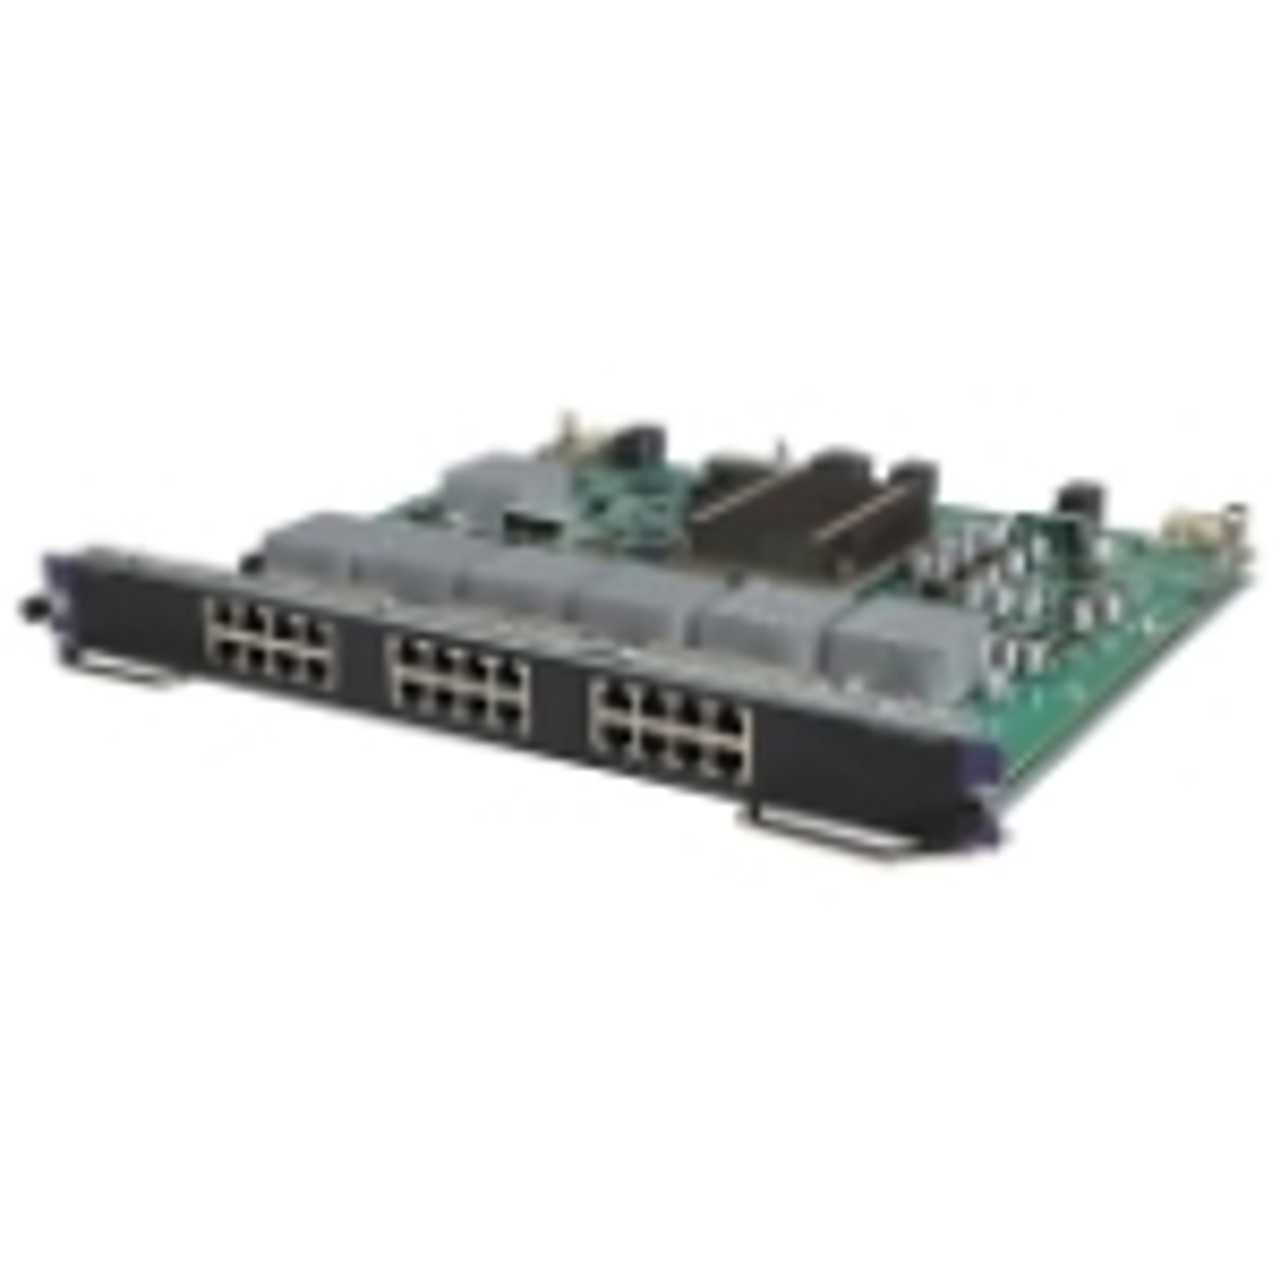 JG615A HP FlexFabric 11900 24-Port 1/10GBase- T SF Module For Data Networking 24 x 10GBase-T LAN10